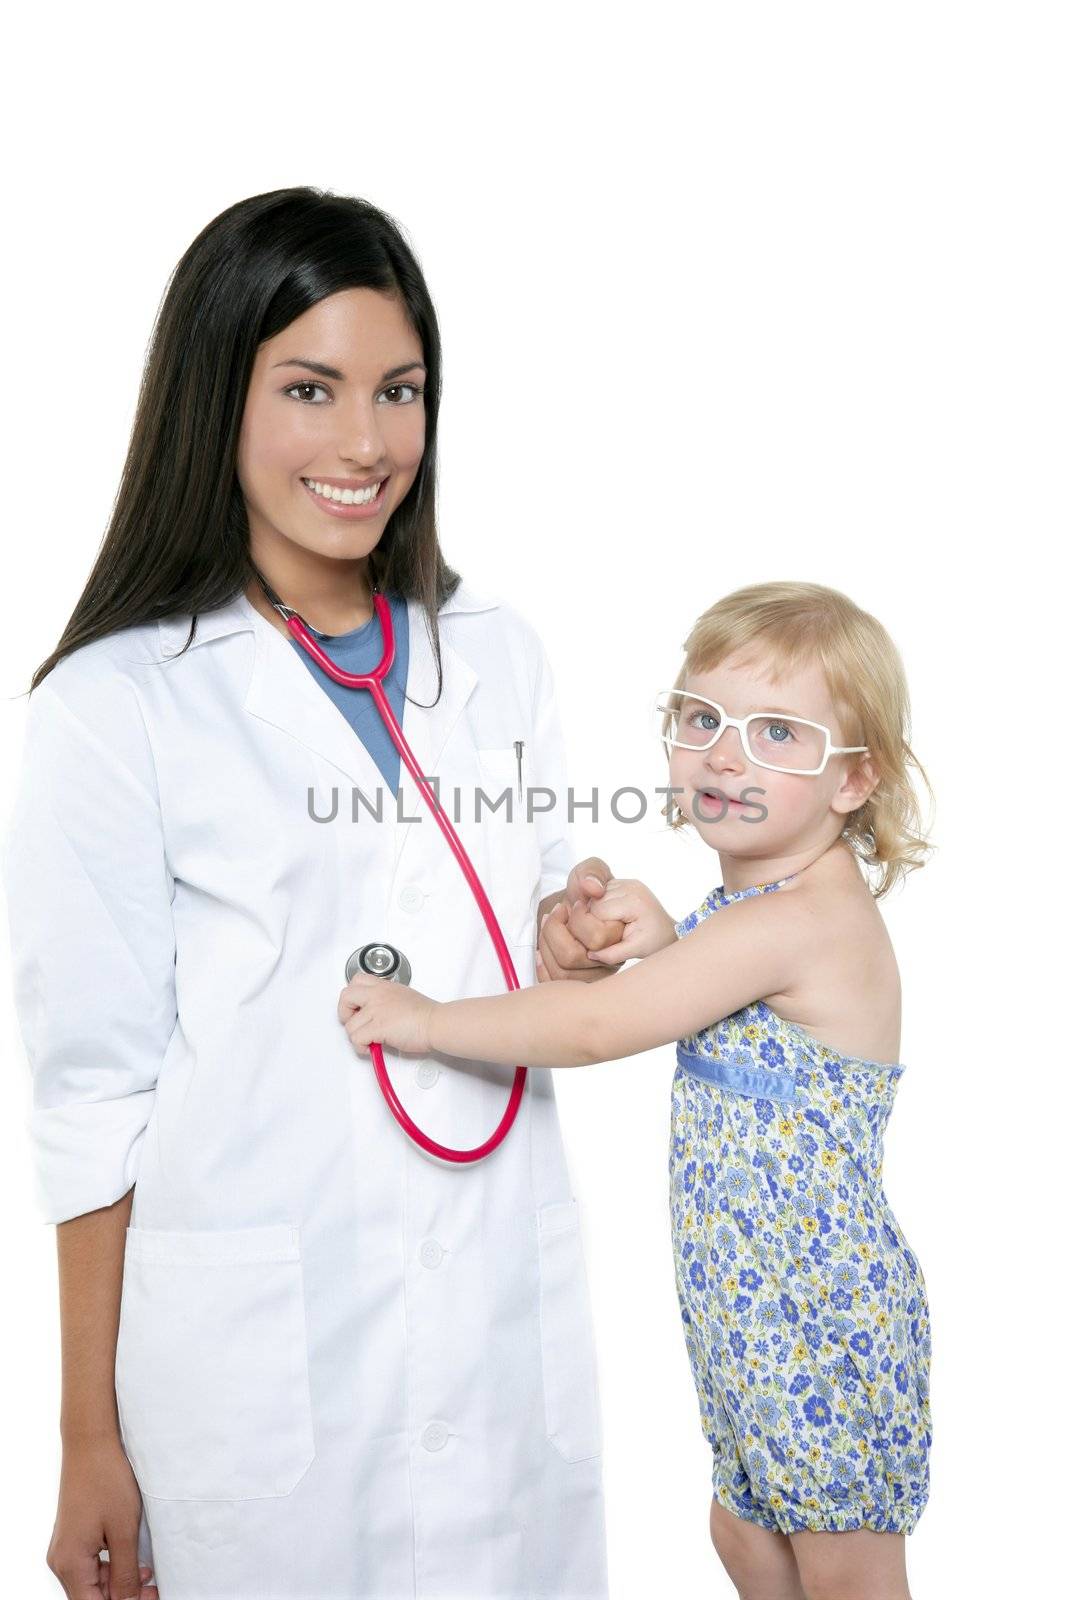 Brunette pediatric doctor with blond little girl on medical exam